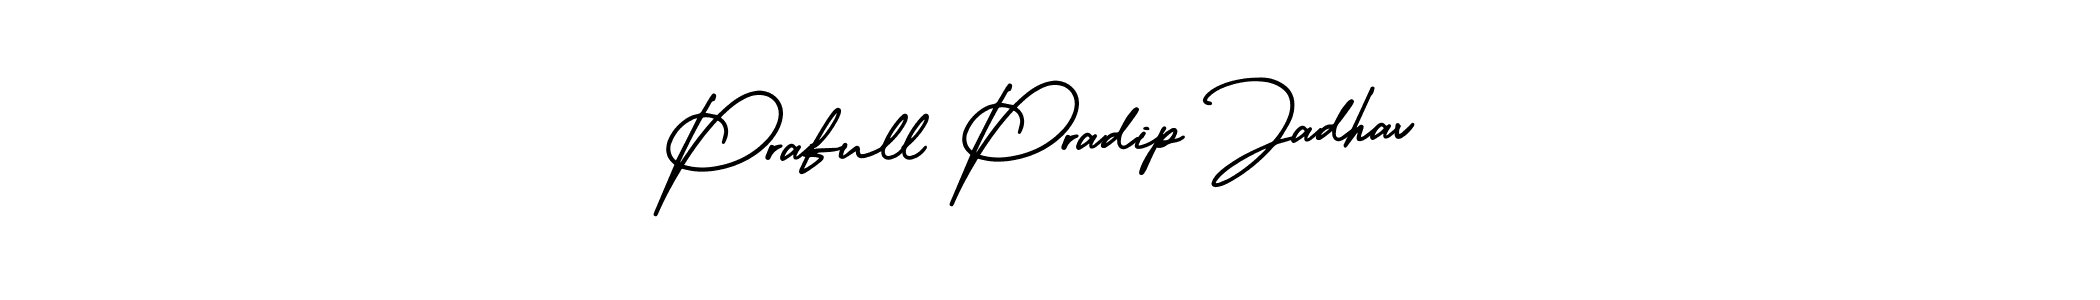 Design your own signature with our free online signature maker. With this signature software, you can create a handwritten (AmerikaSignatureDemo-Regular) signature for name Prafull Pradip Jadhav. Prafull Pradip Jadhav signature style 3 images and pictures png